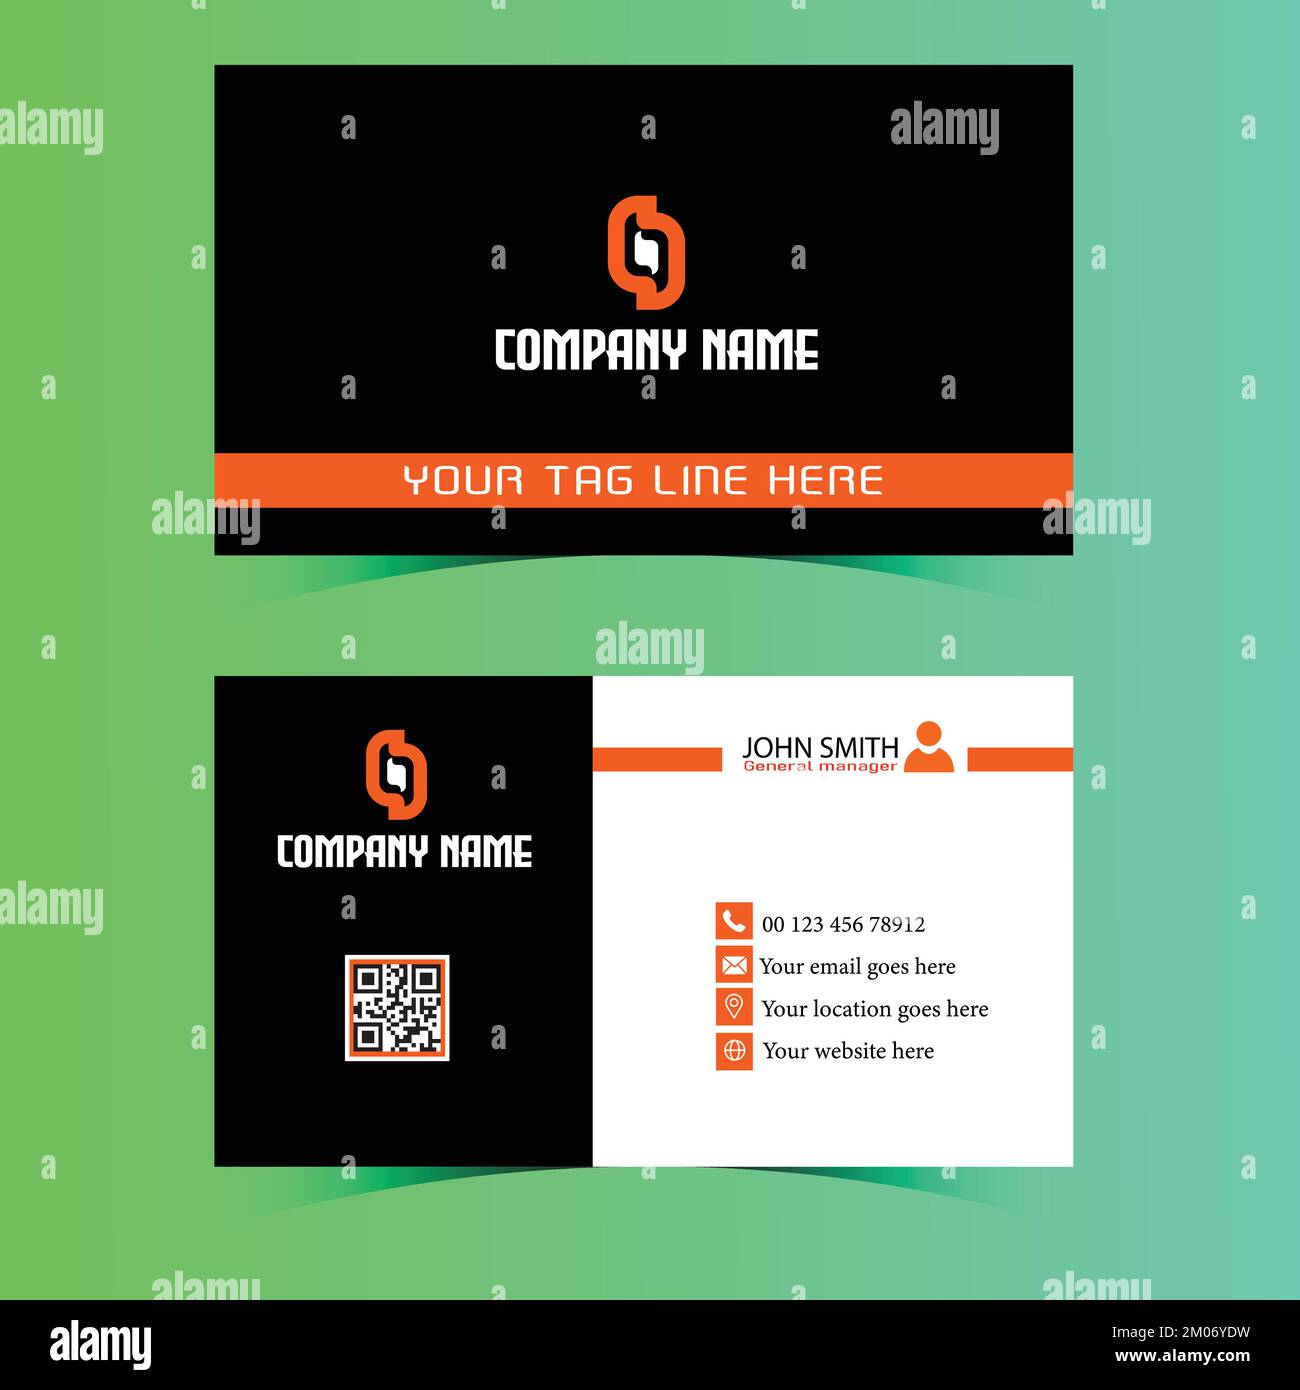 Business Card Design Vector Template. Orange and Black Business Card Design. Stock Vector